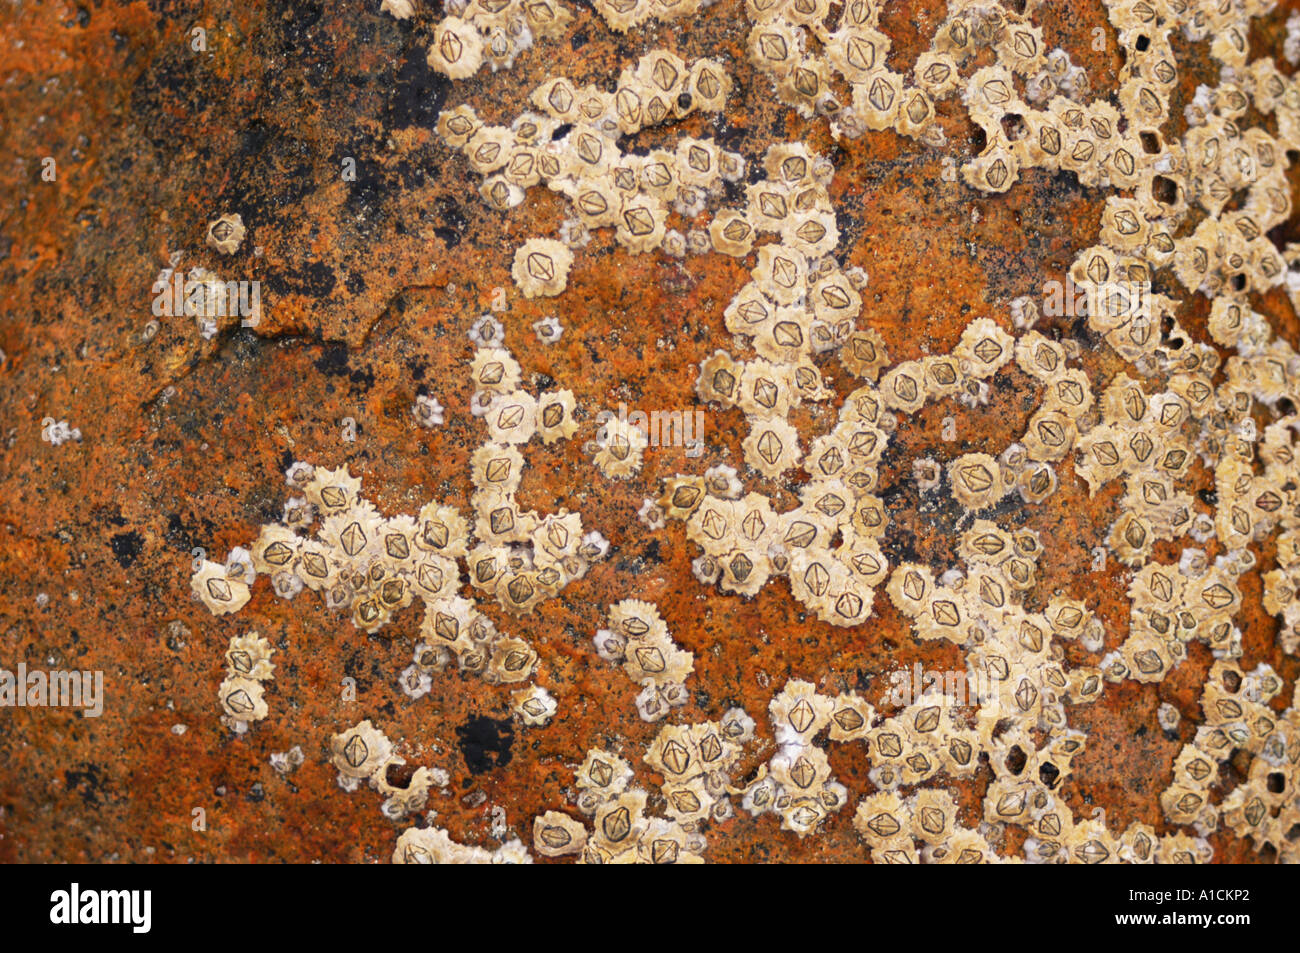 barnacles on rock Stock Photo